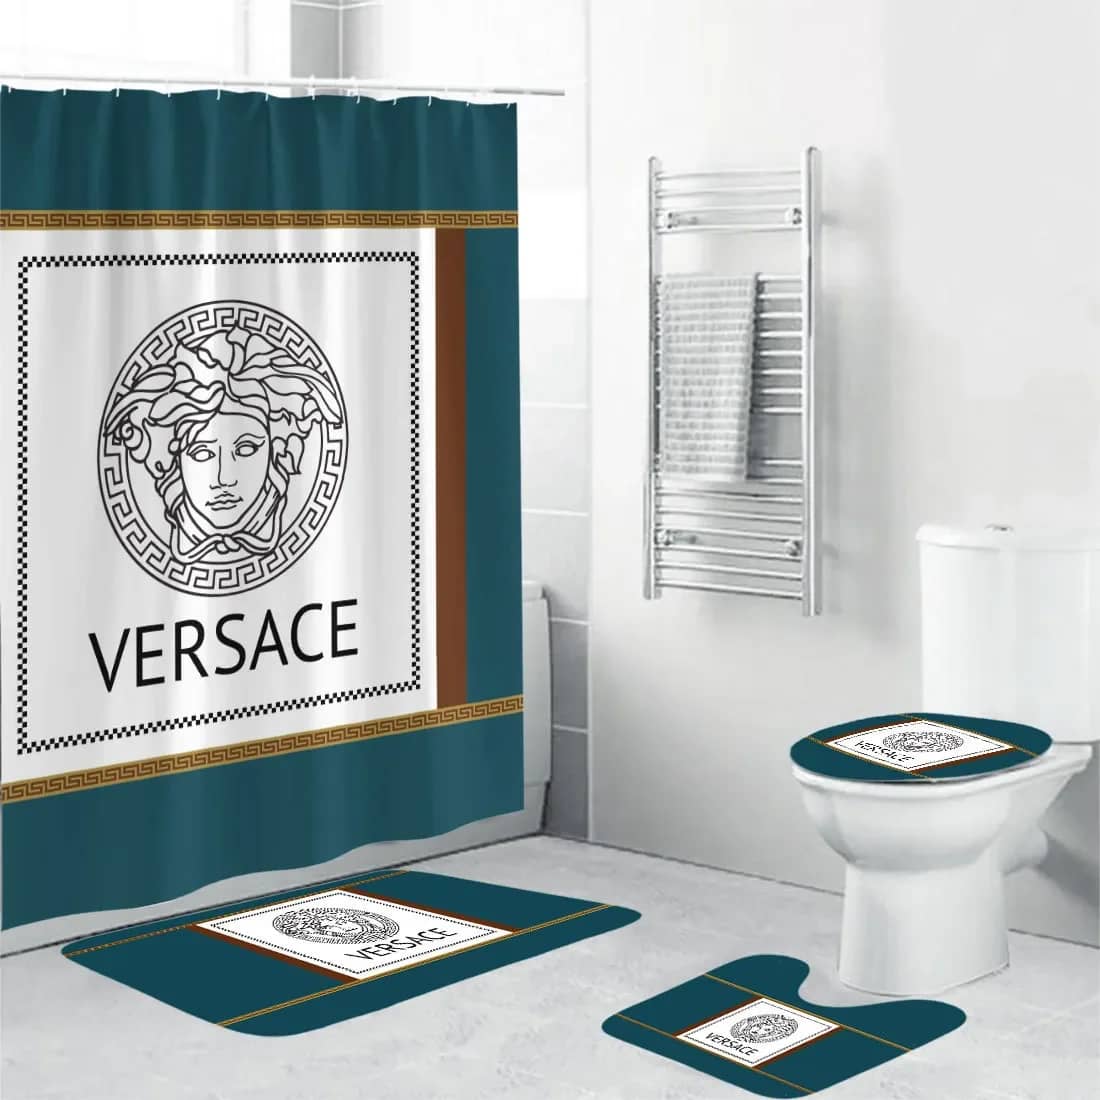 Versace Luxury Brand Premium Bathroom Sets